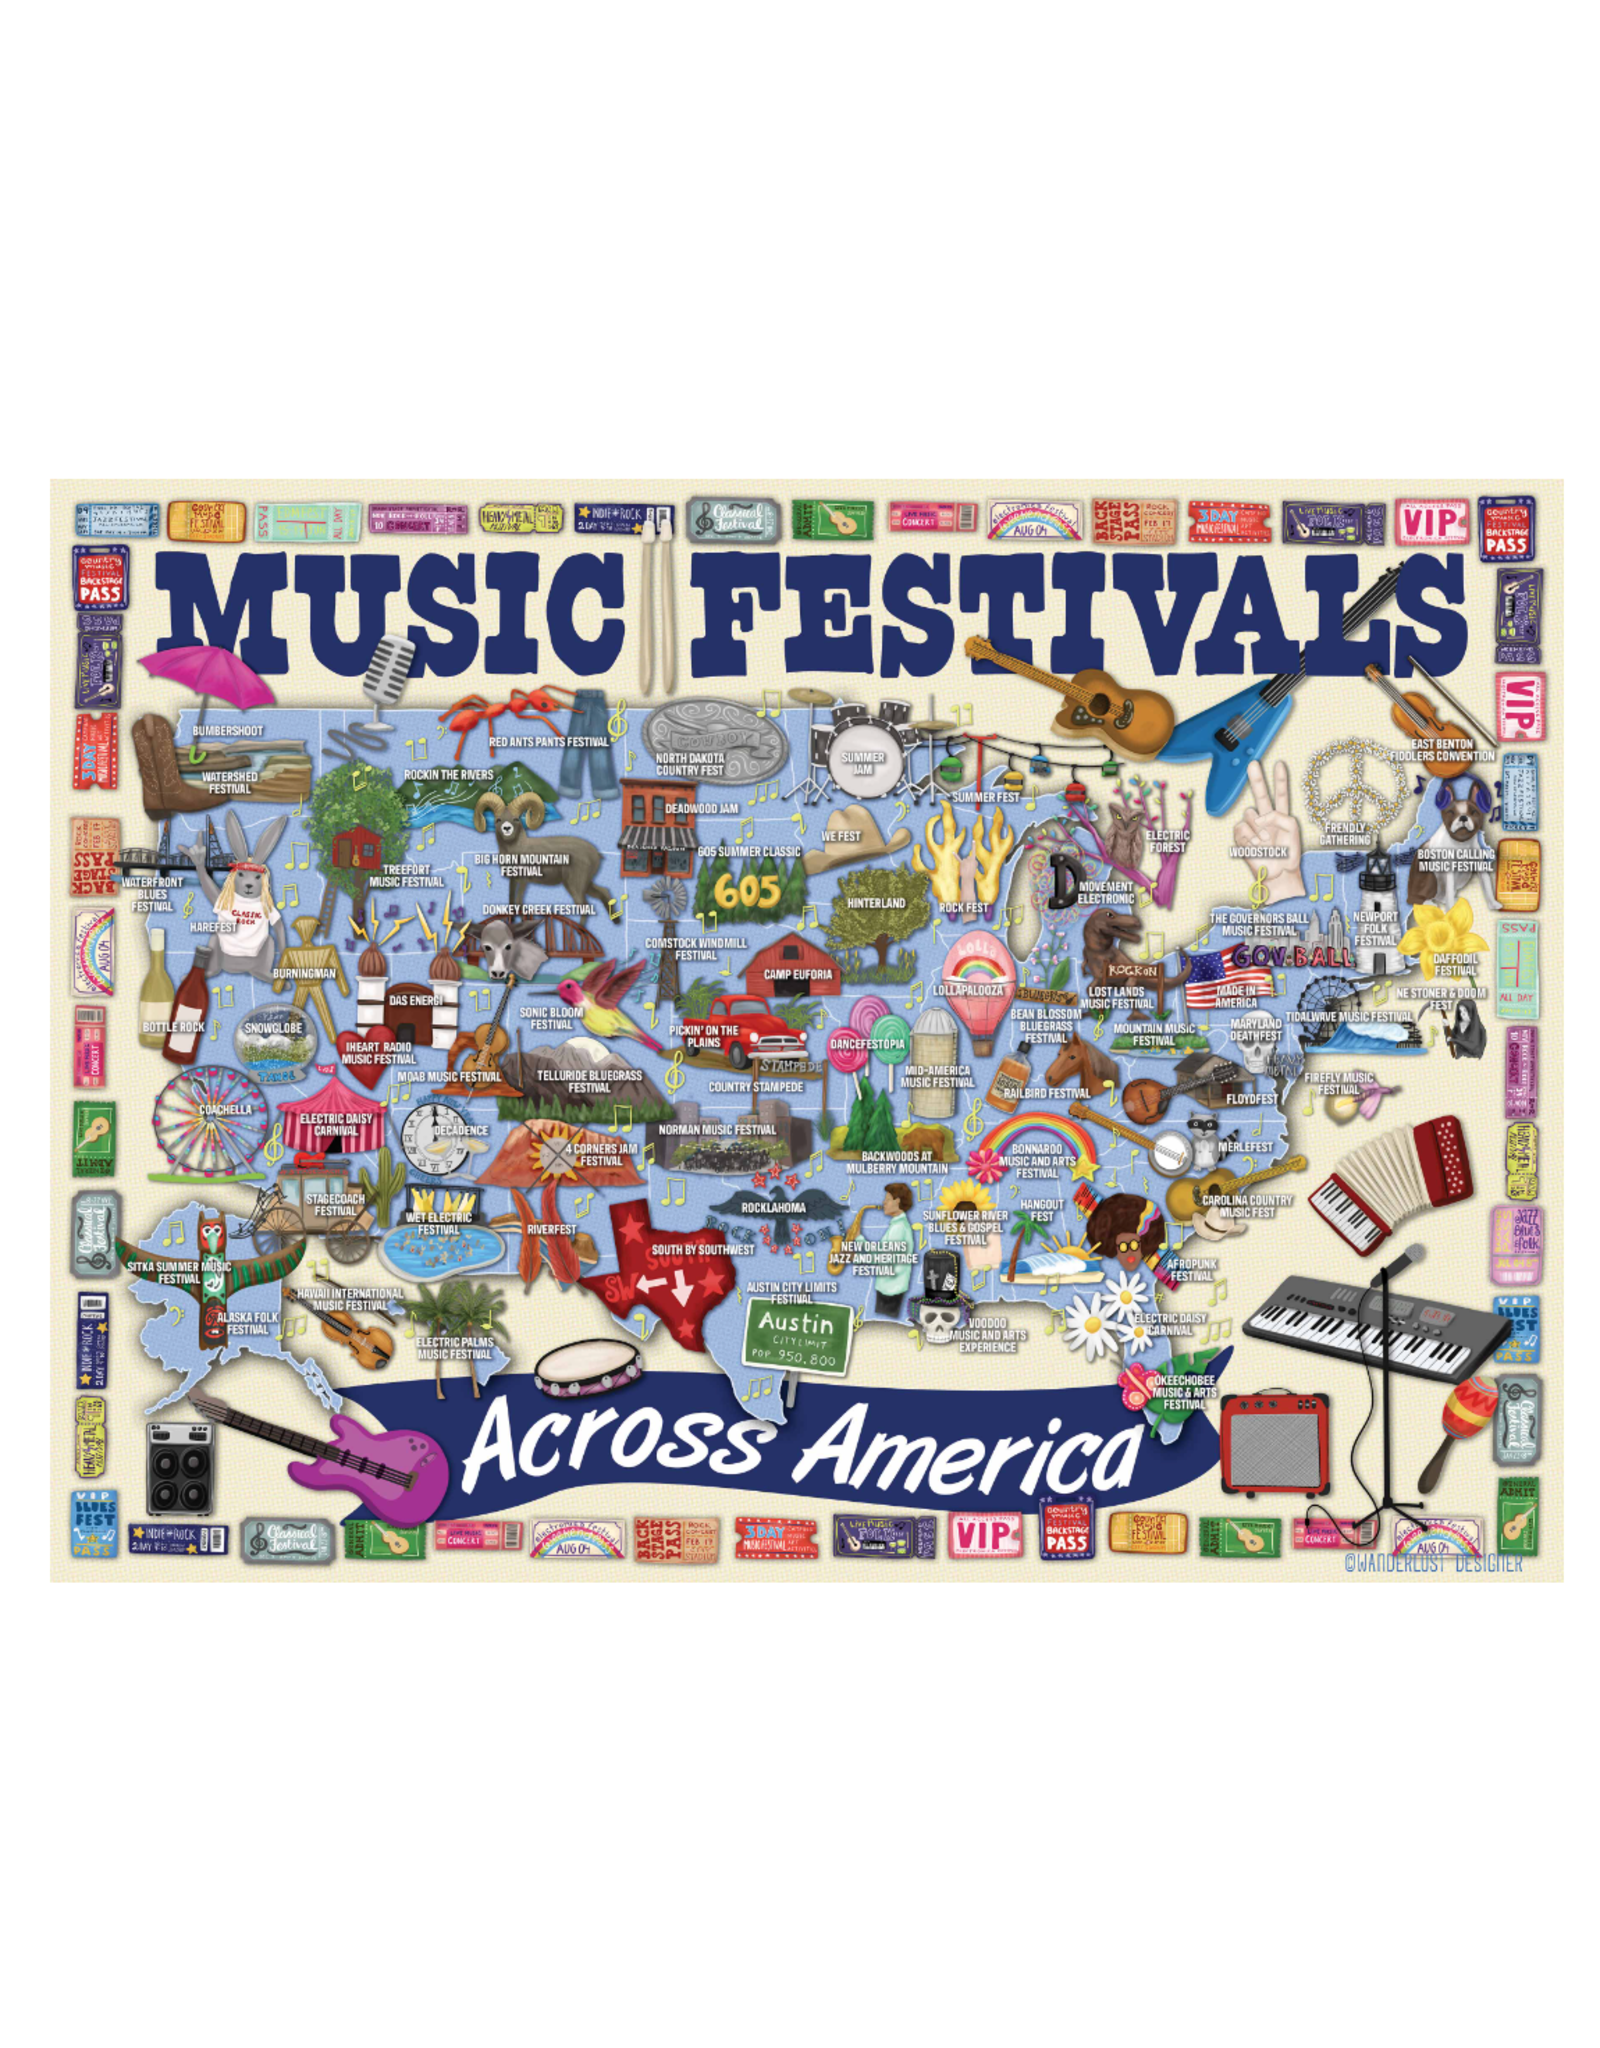 True South Music Festivals Across America Puzzles